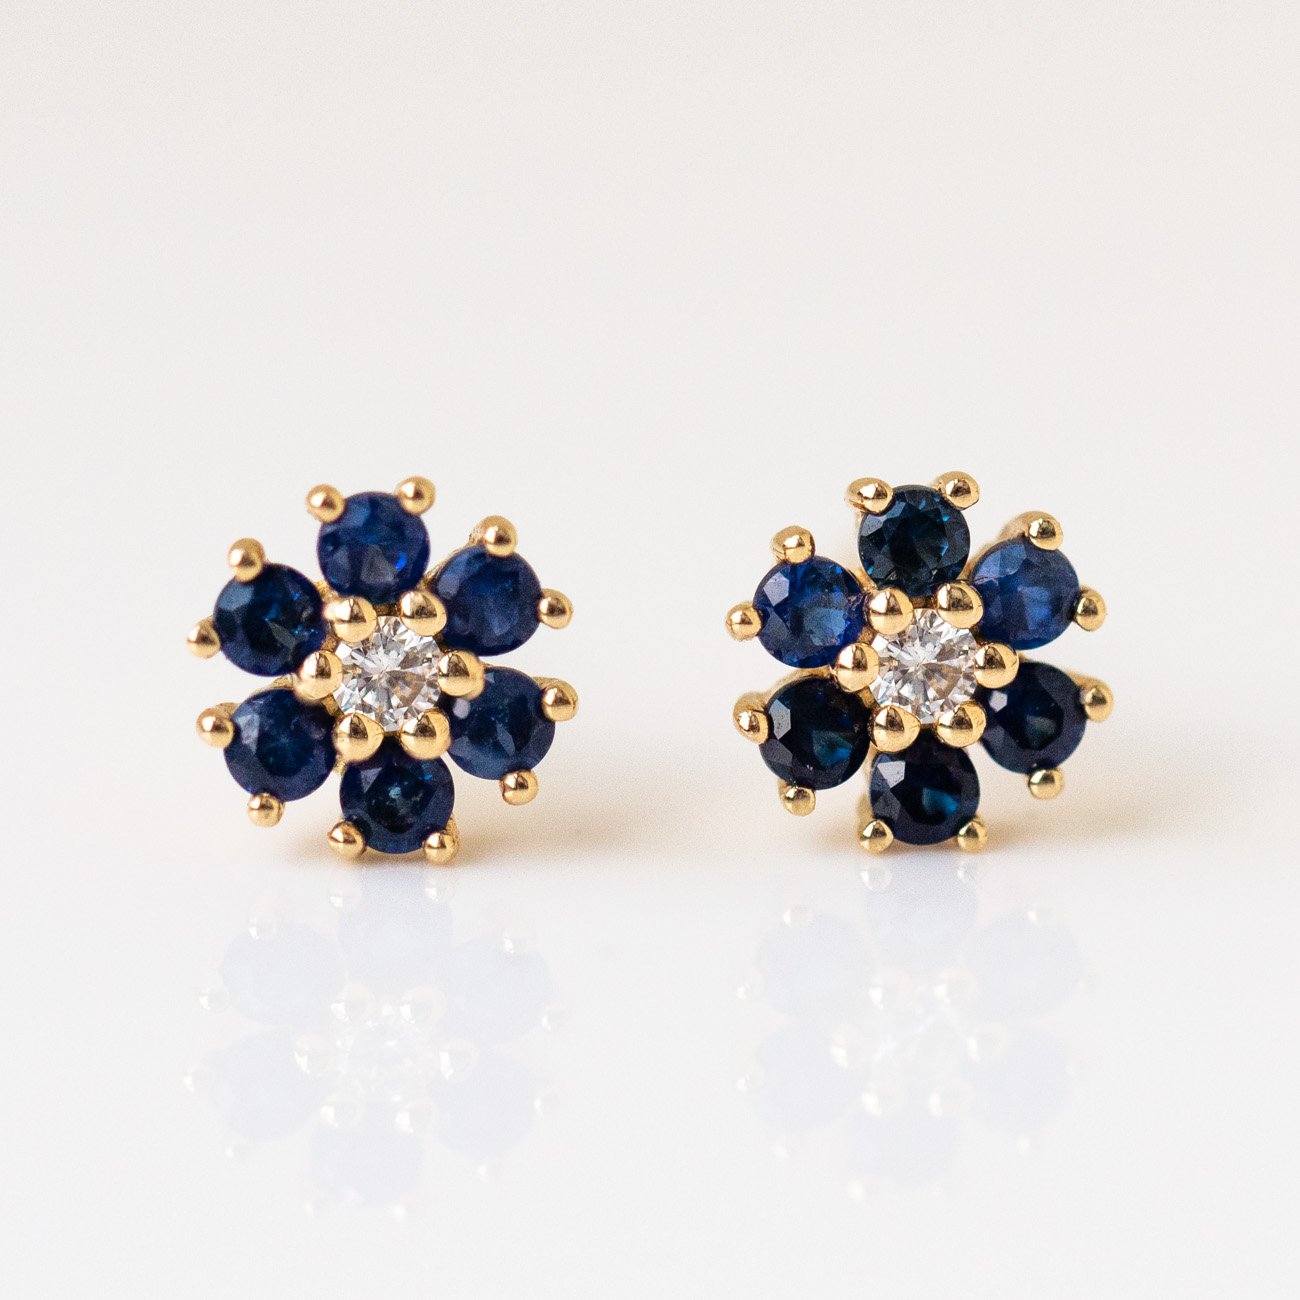 22kt Gold Plated Pink Green /& Blue Semiprecious Gemstone Stud Earrings  16mm Prong Set Flower Earrings  Everyday Jewelry Gift Idea EM140